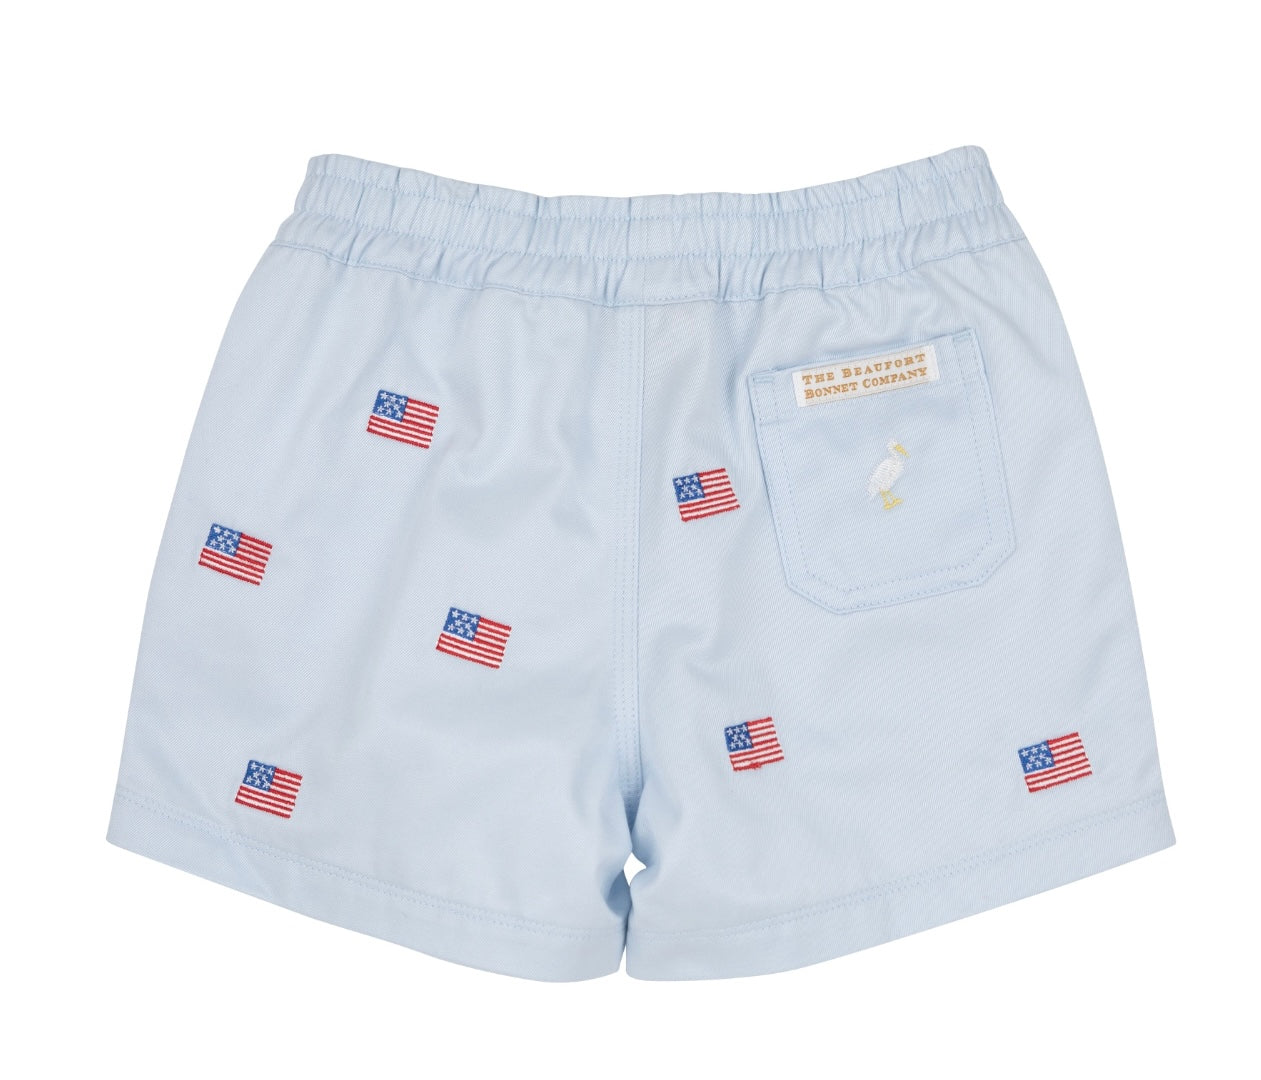 Critter Sheffield Shorts - Buckhead Blue w/ American Flags